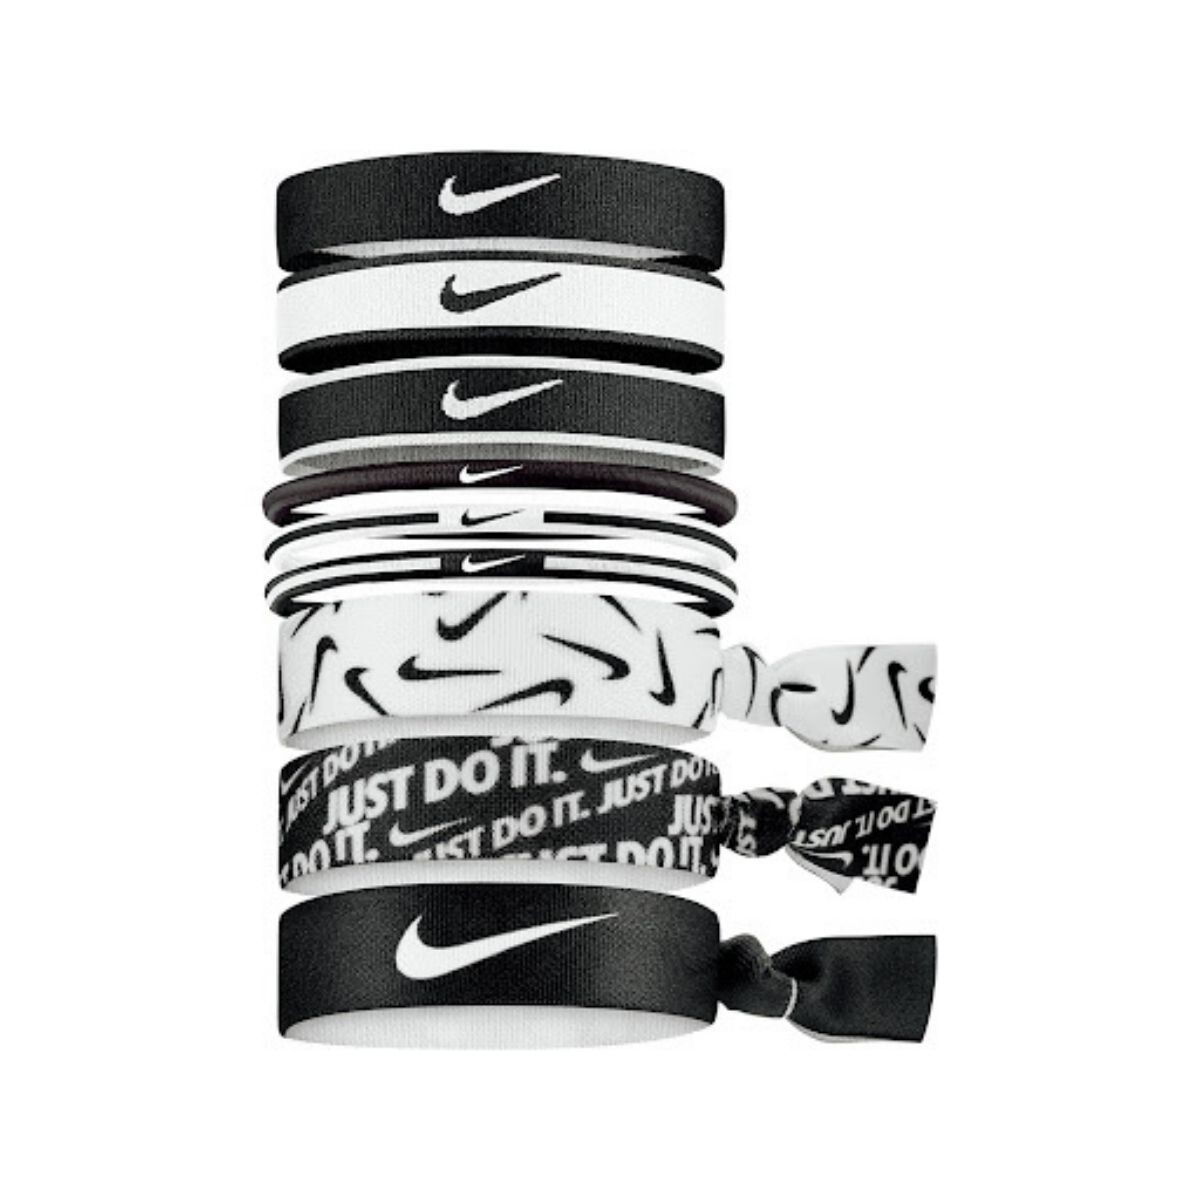 Vincha Nike Training Unisex Mixed Hairbands 9 PK - Color Único 